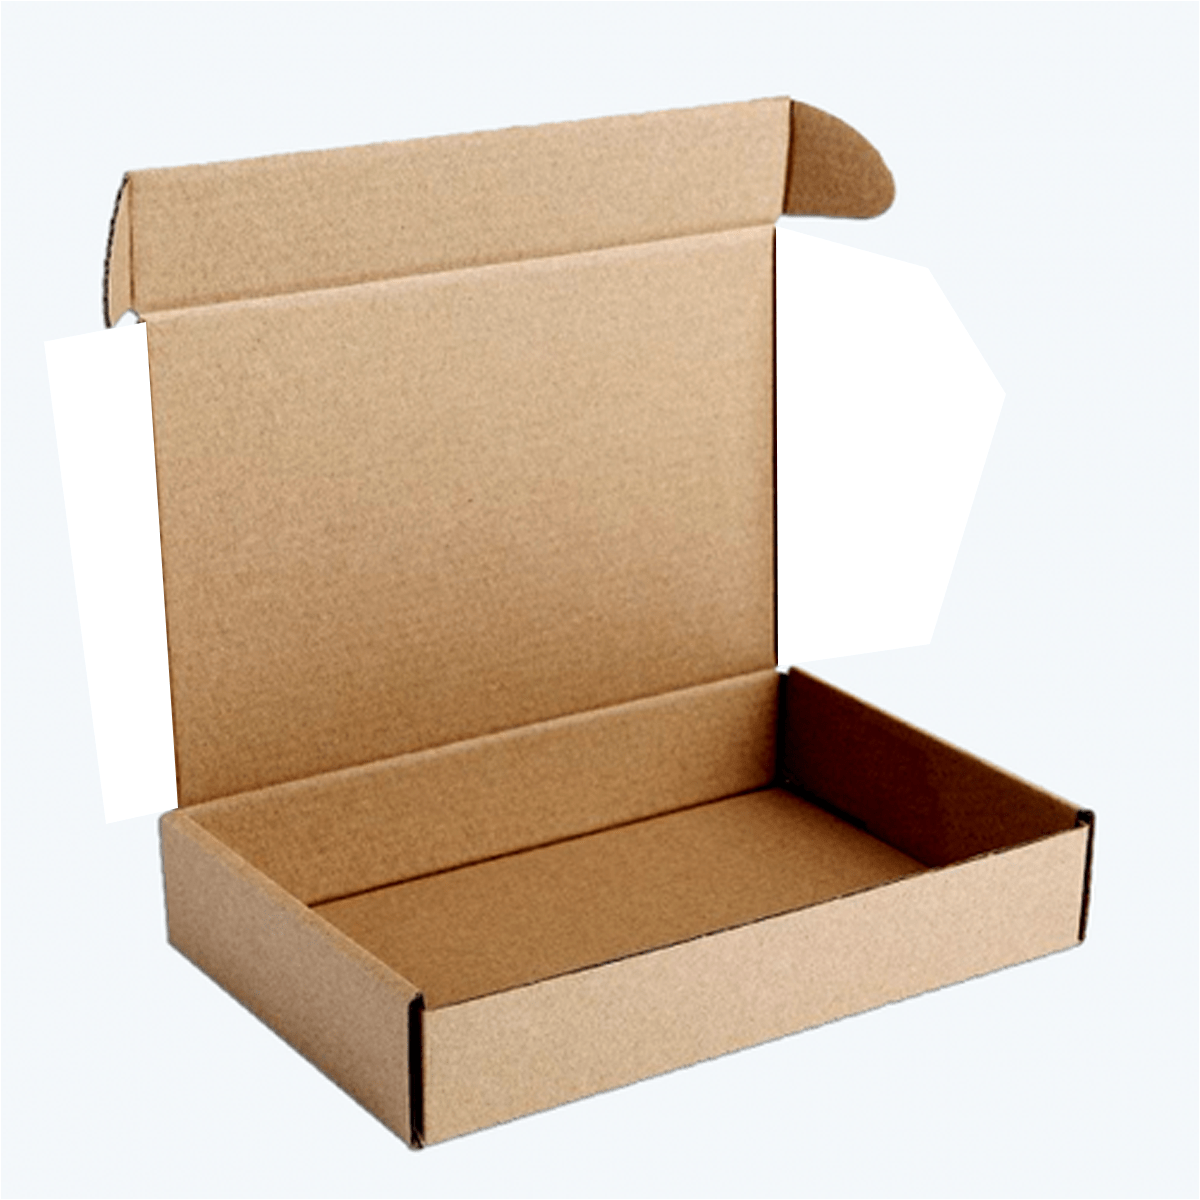 #2 Cardboard 1-Wavy 500 x 300 x 200 MM; Box; box cardboard; shipping box 